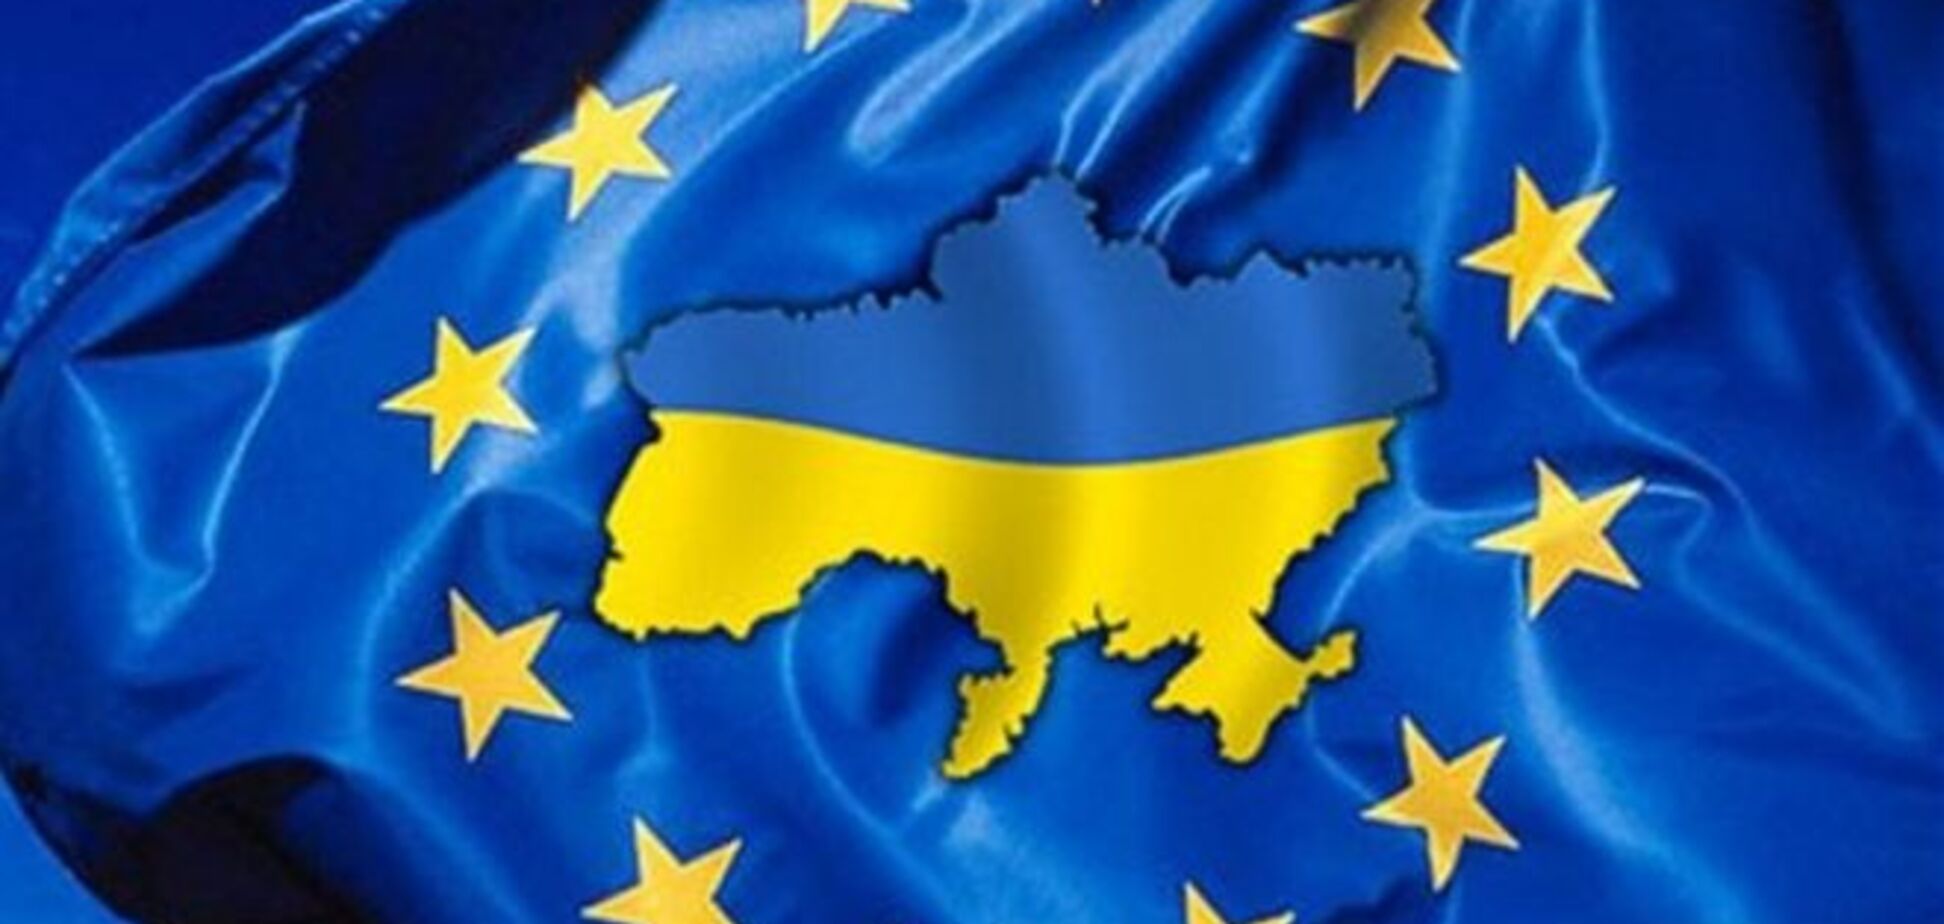 Україна зробила для асоціації з ЄС менше, ніж очікувалося - посол ЄС